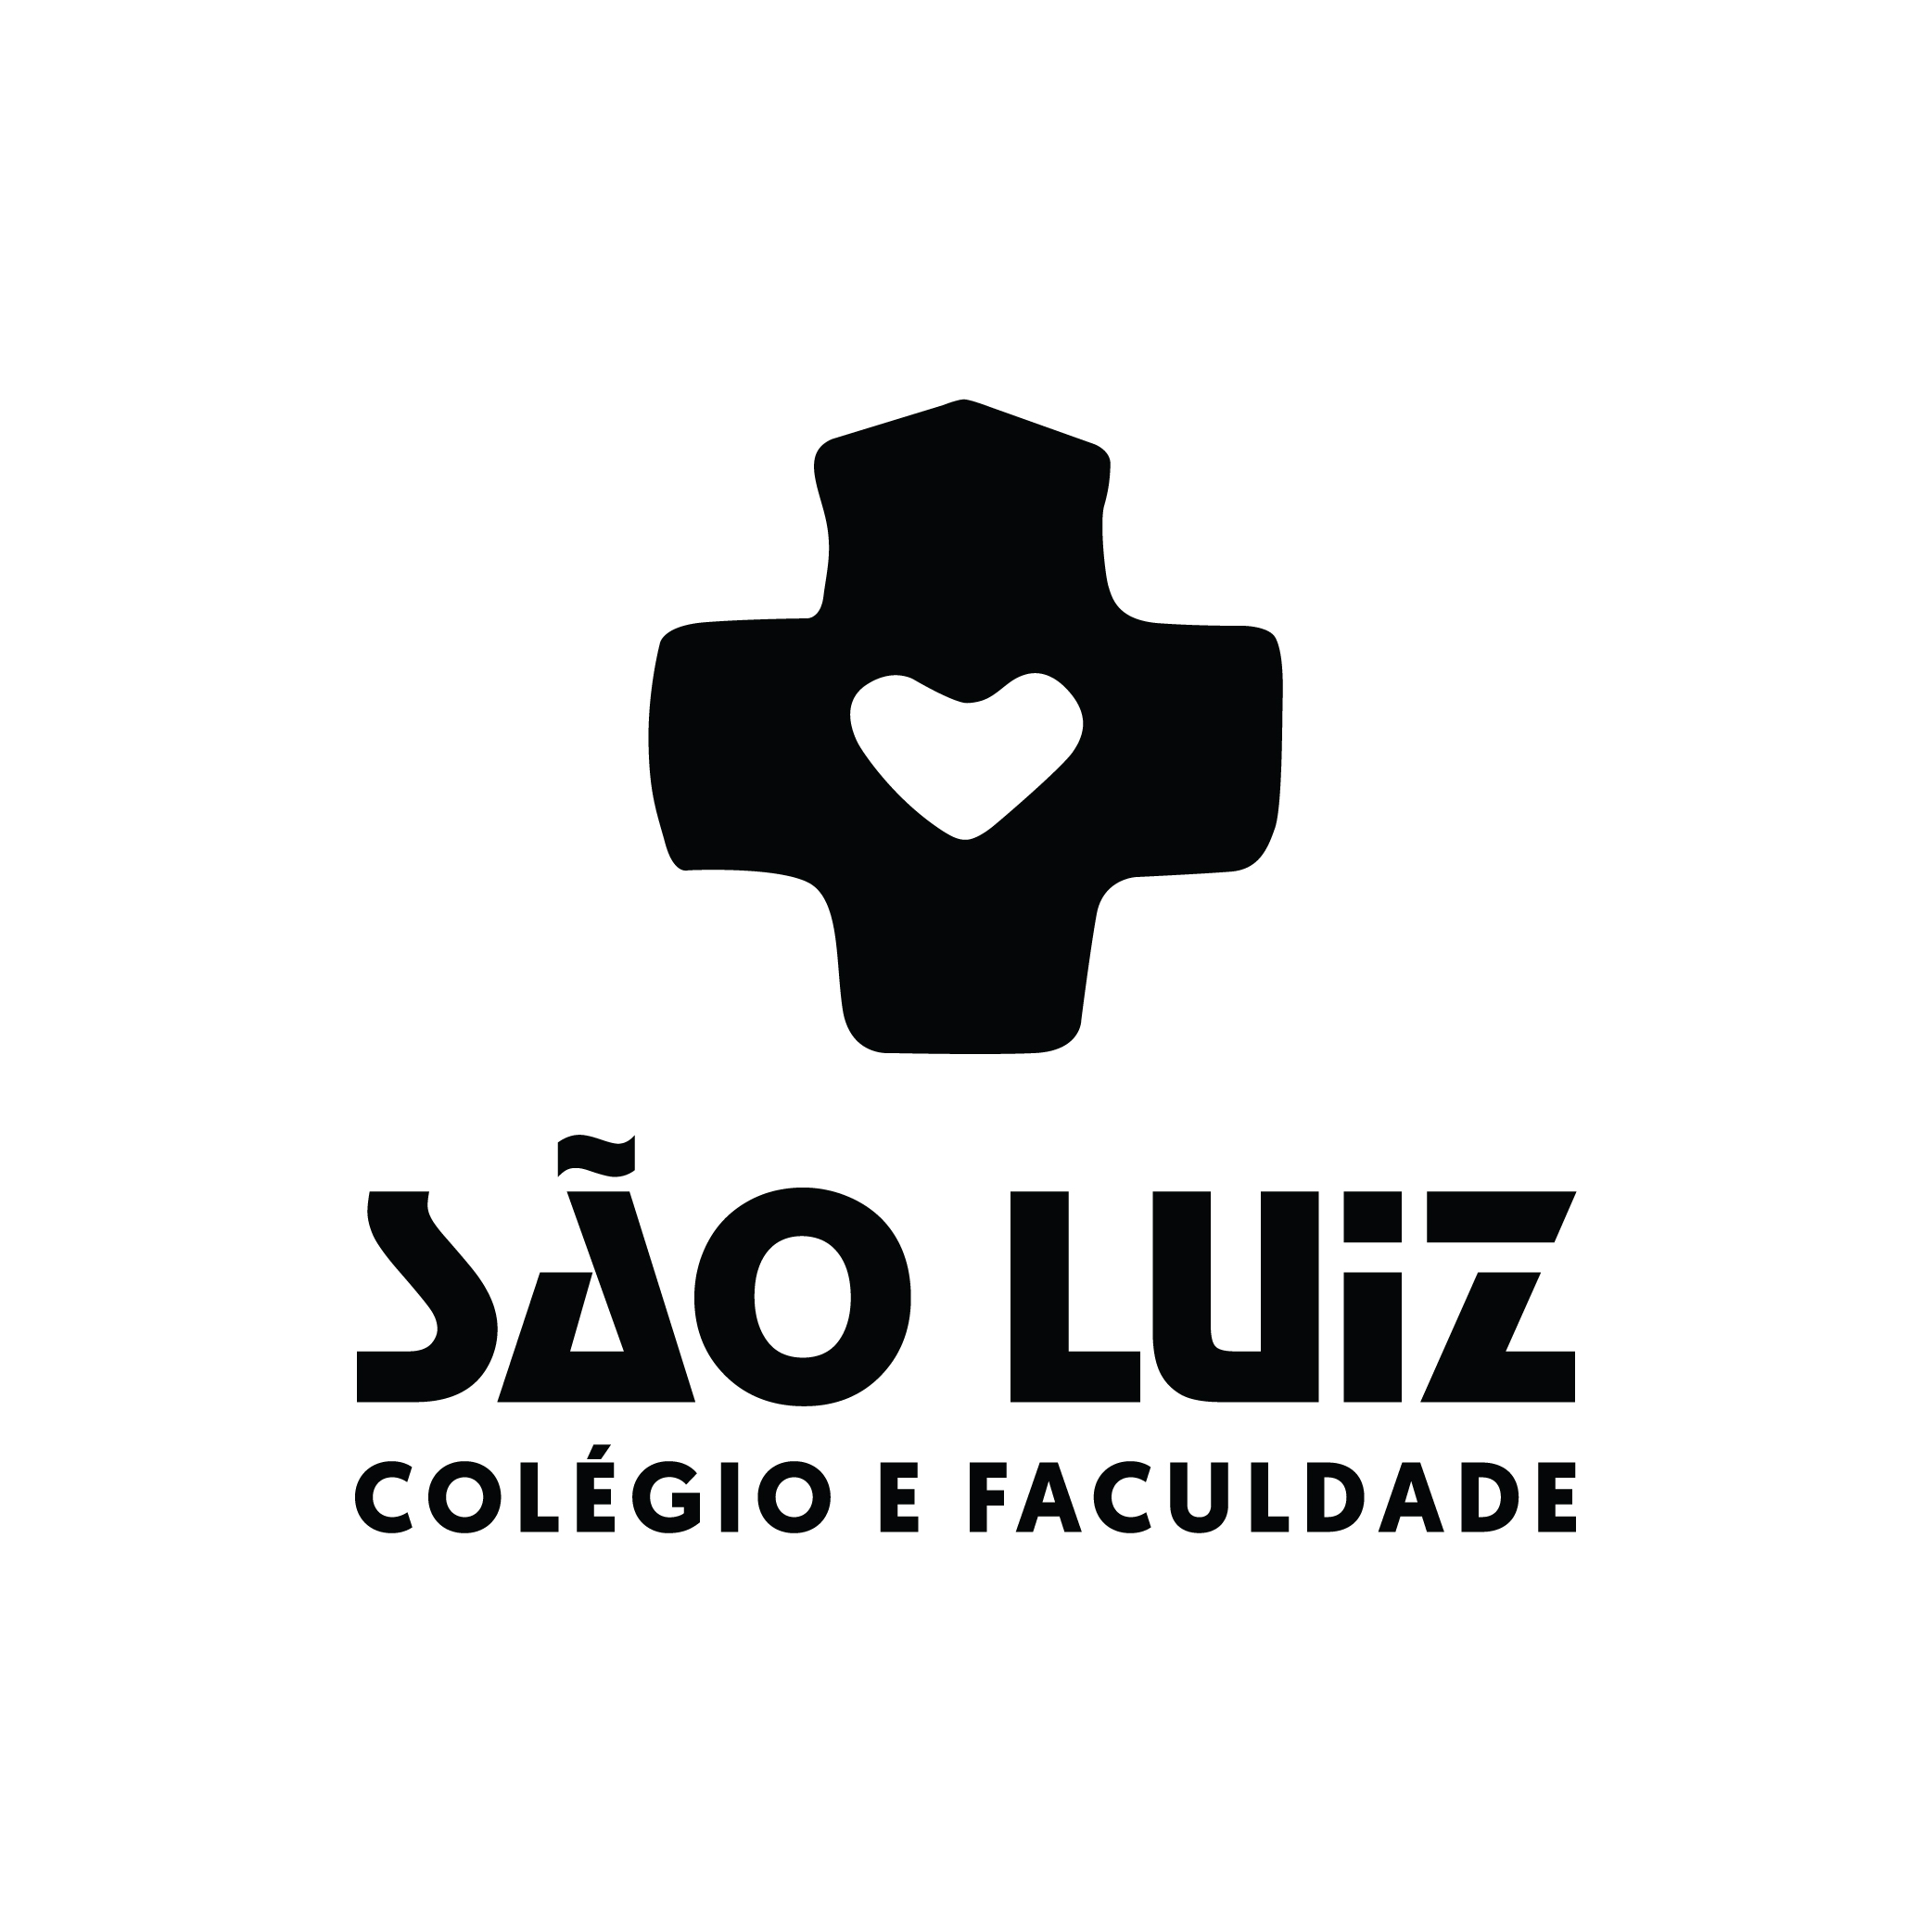 Imprensa São Luiz